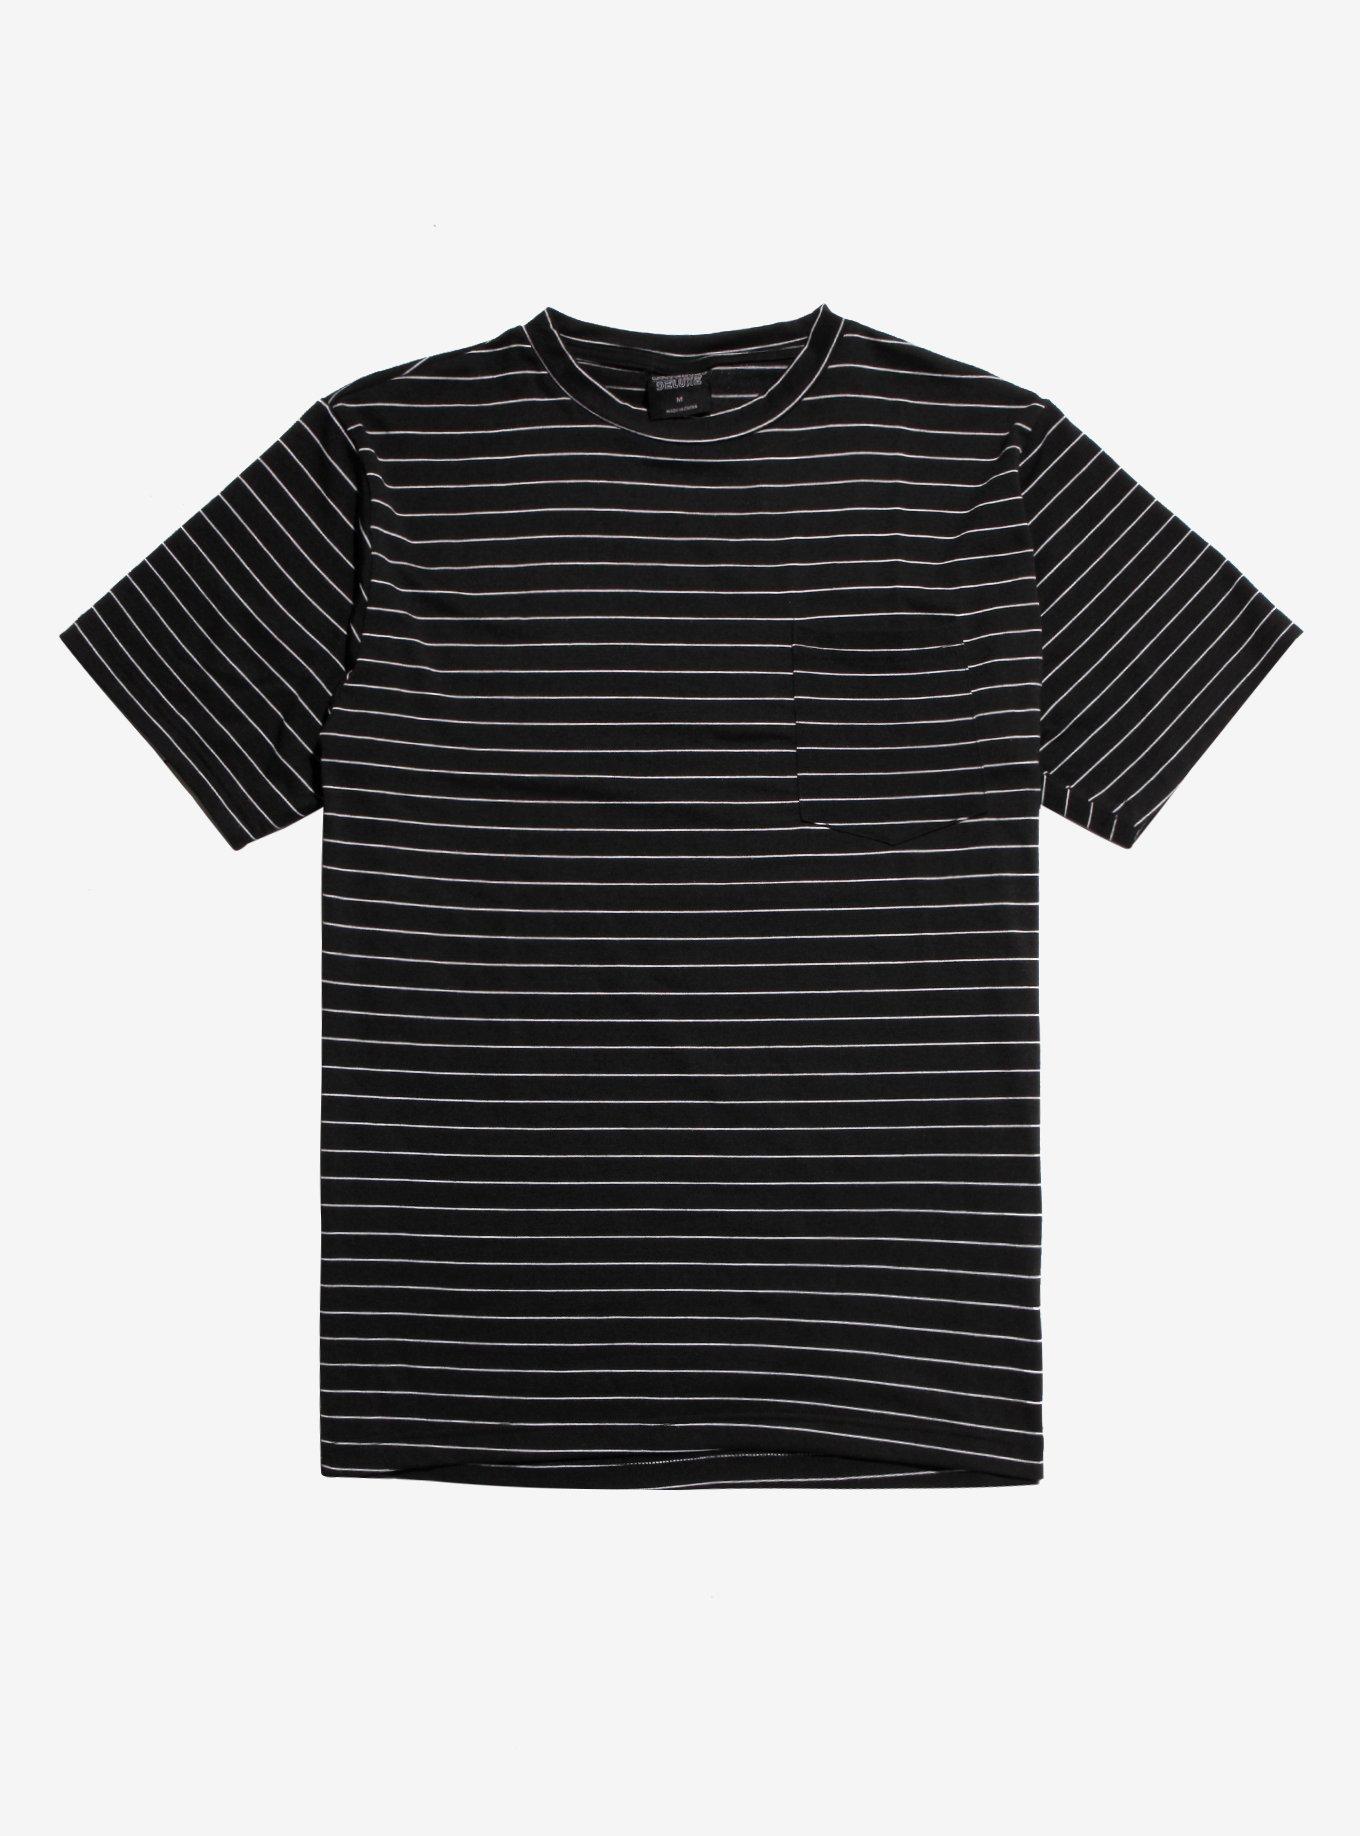 Black & White Striped Pocket T-Shirt | Hot Topic